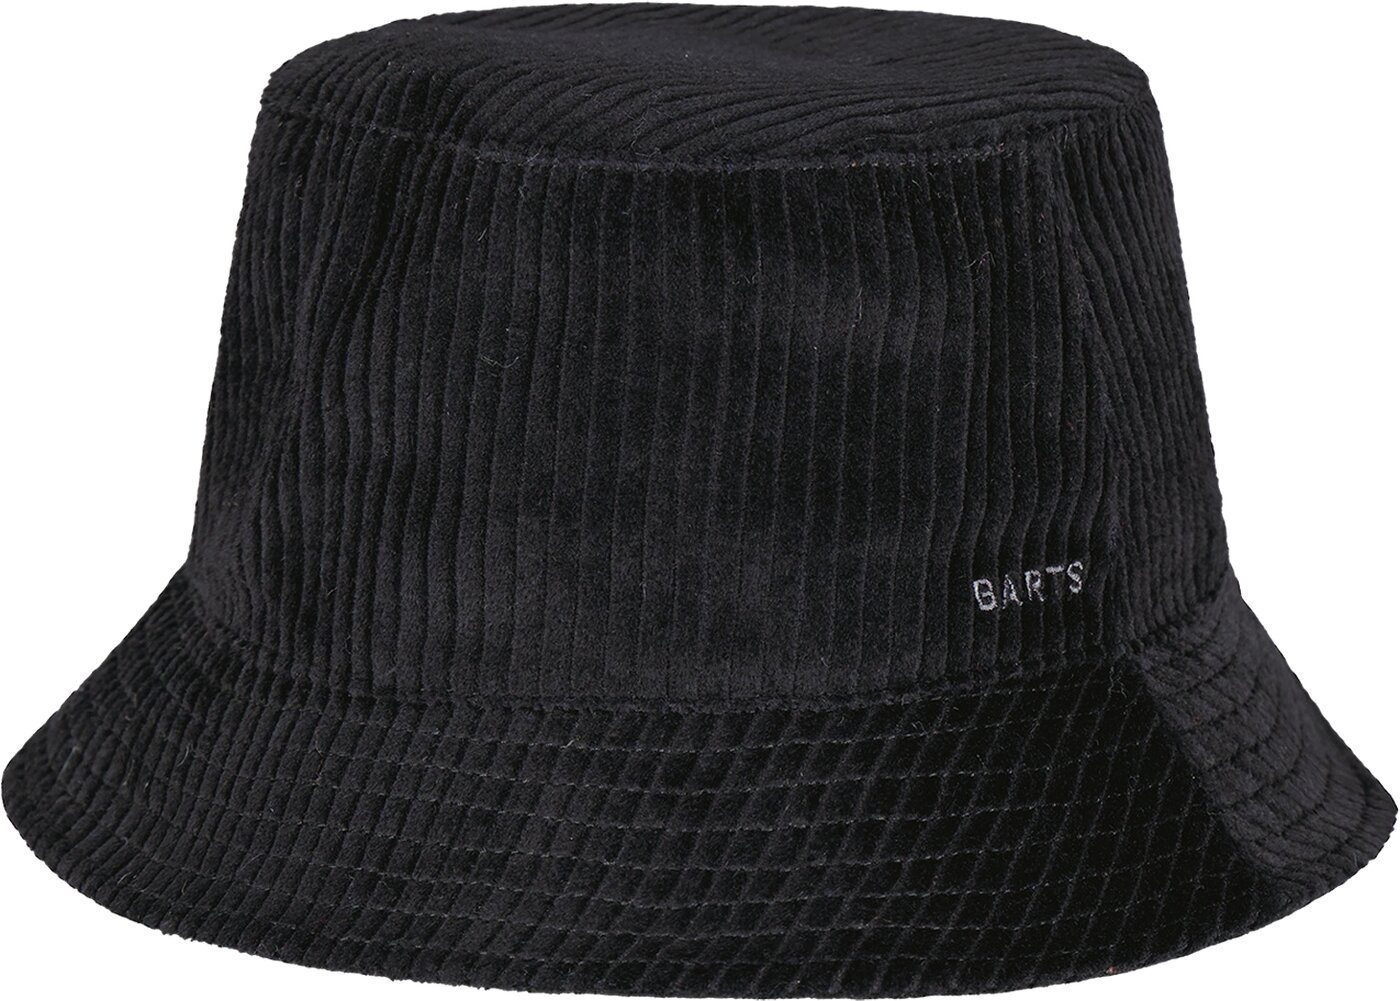 BLACK Barts Hat Snapback Cap Balomba